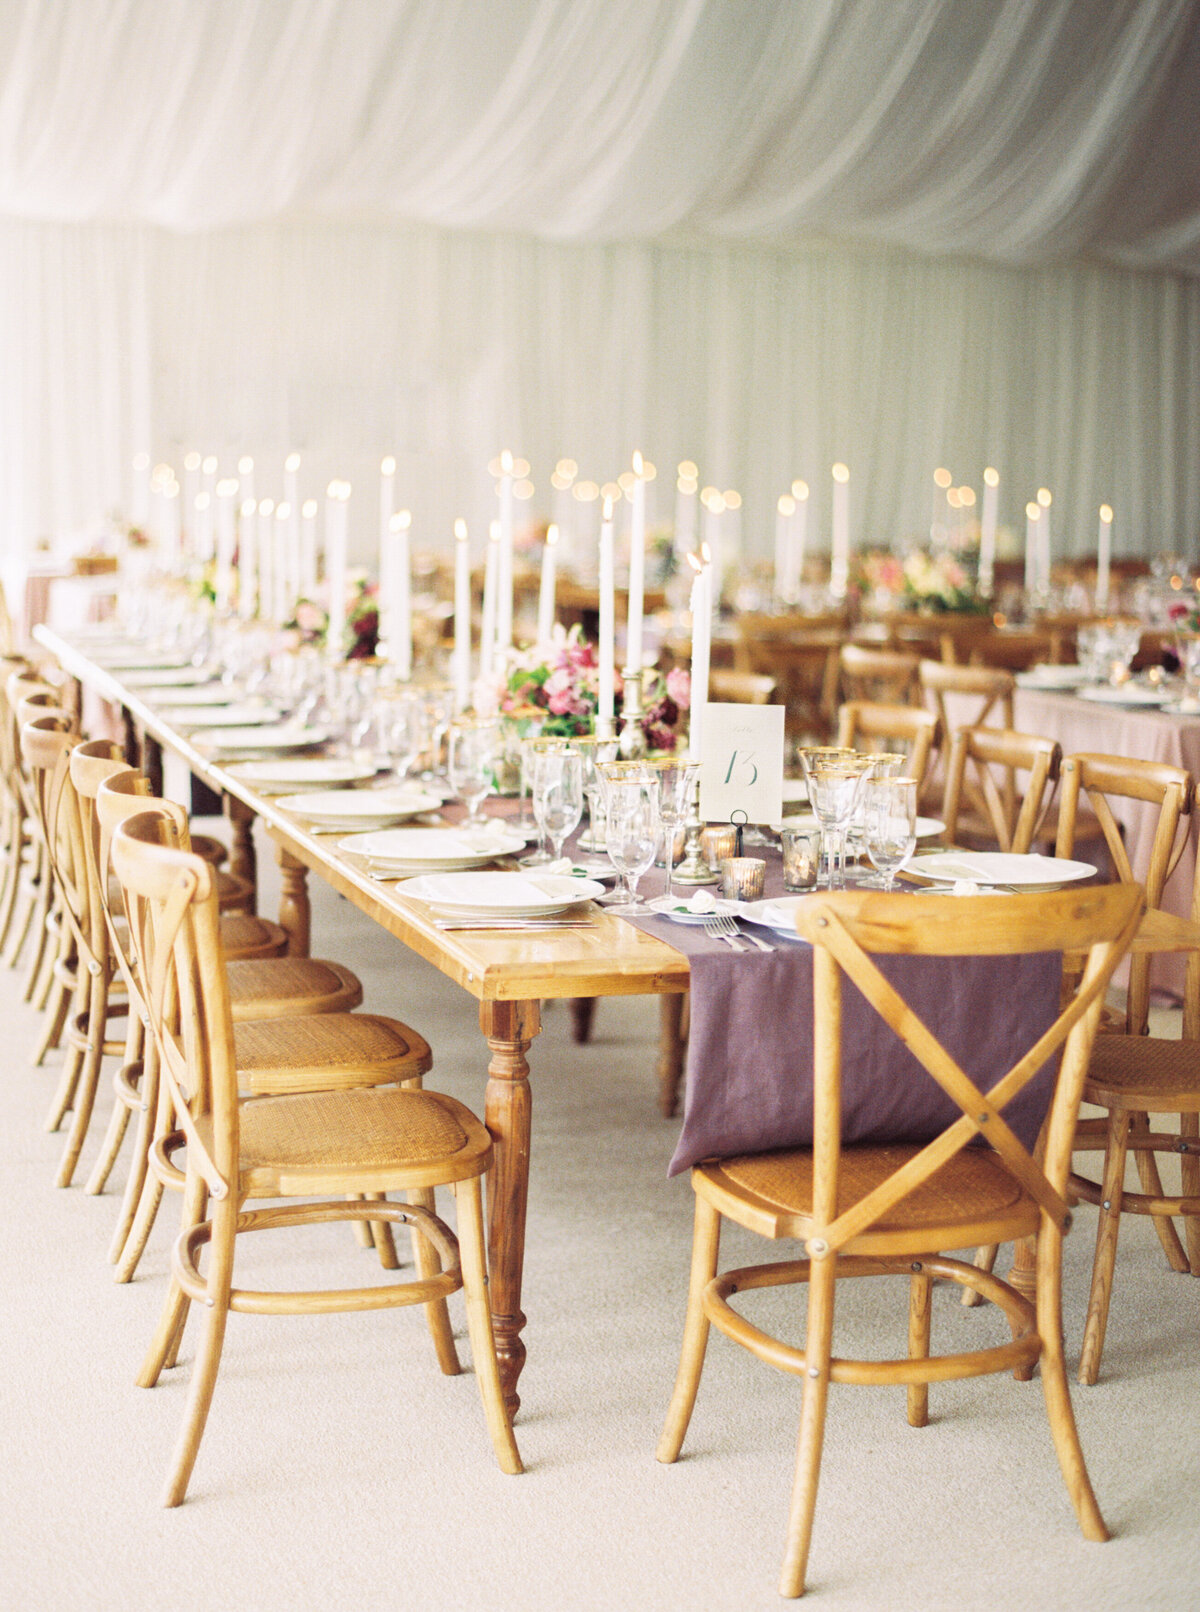 tented-outdoor-wedding-long-wooden-table-purple-runner-candlesticks